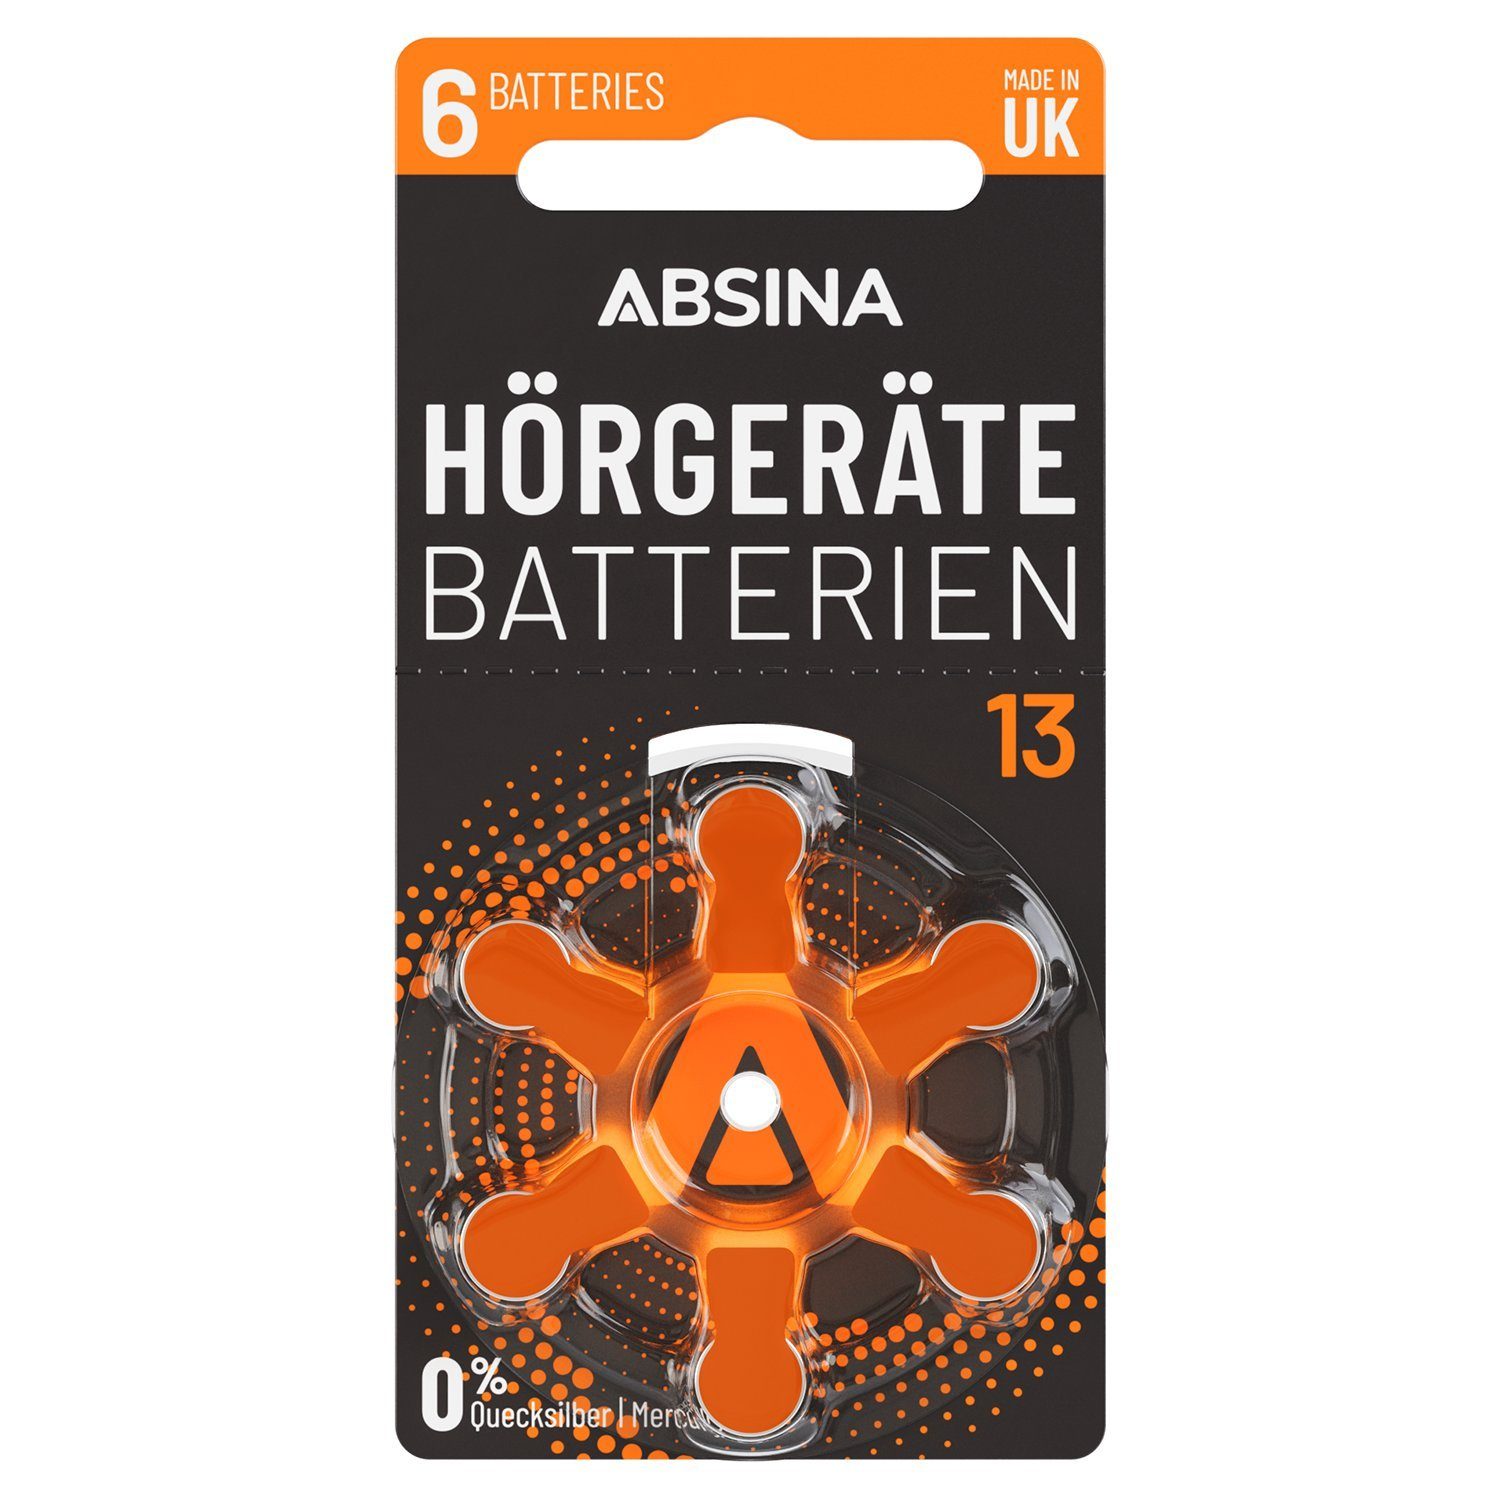 Hörgeräte Batterien Hörgerätebatterien 13 - ABSINA Knopfzelle, St) 6x P13 PR48 ZL2 13 orange (1